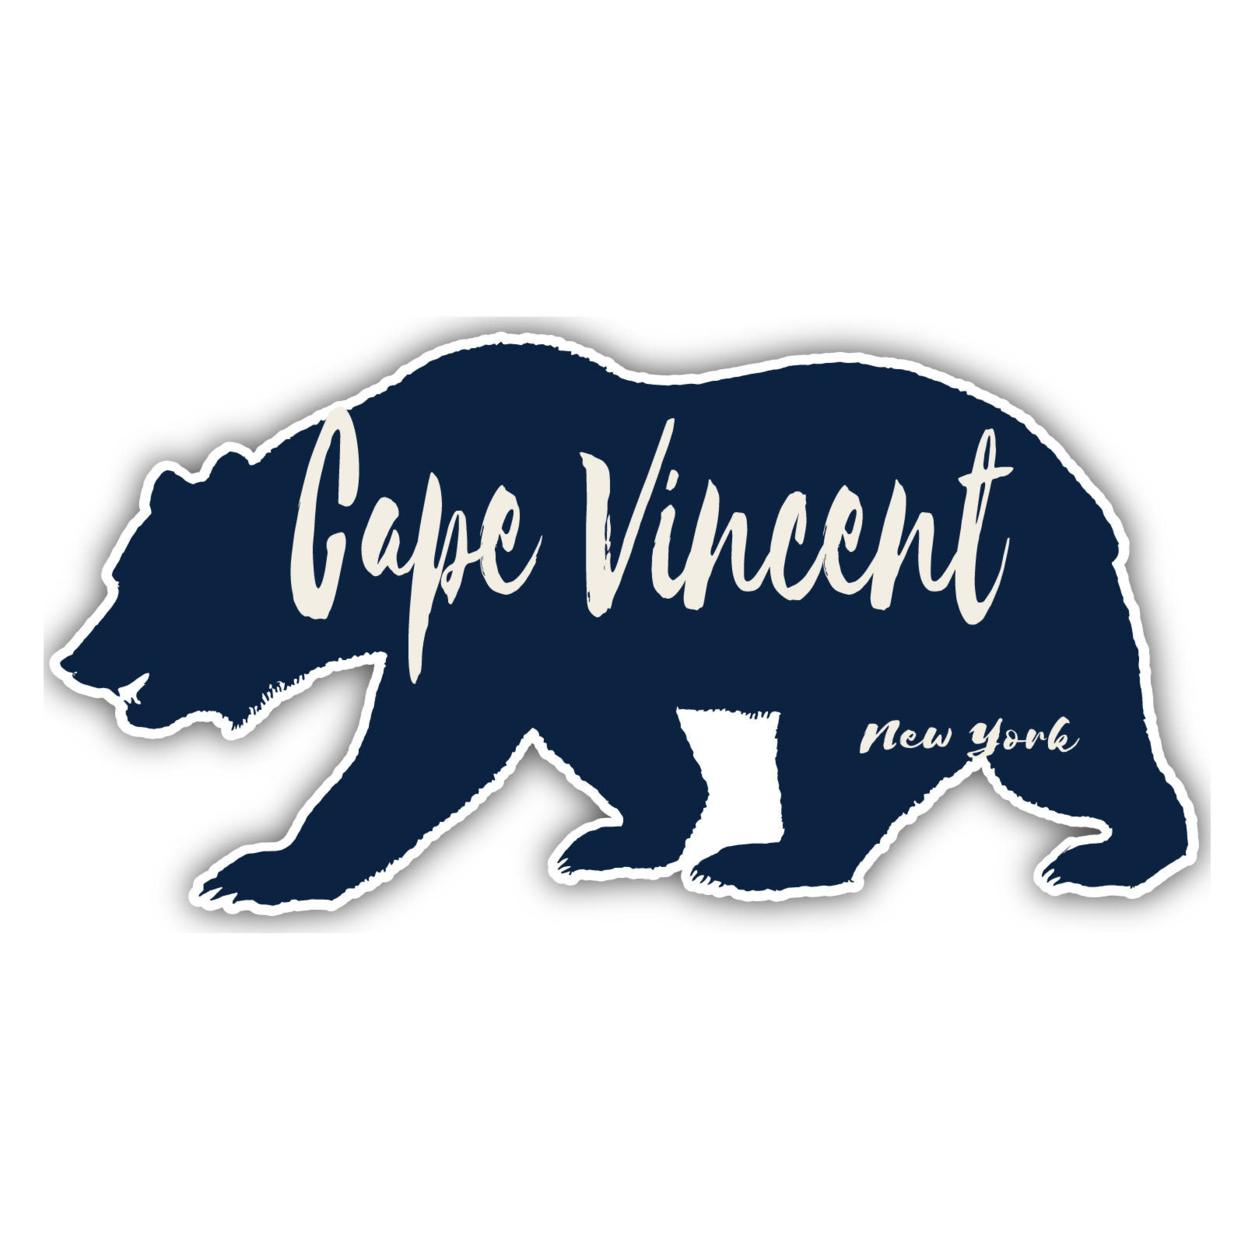 Cape Vincent New York Souvenir Decorative Stickers (Choose Theme And Size) - 4-Pack, 6-Inch, Bear